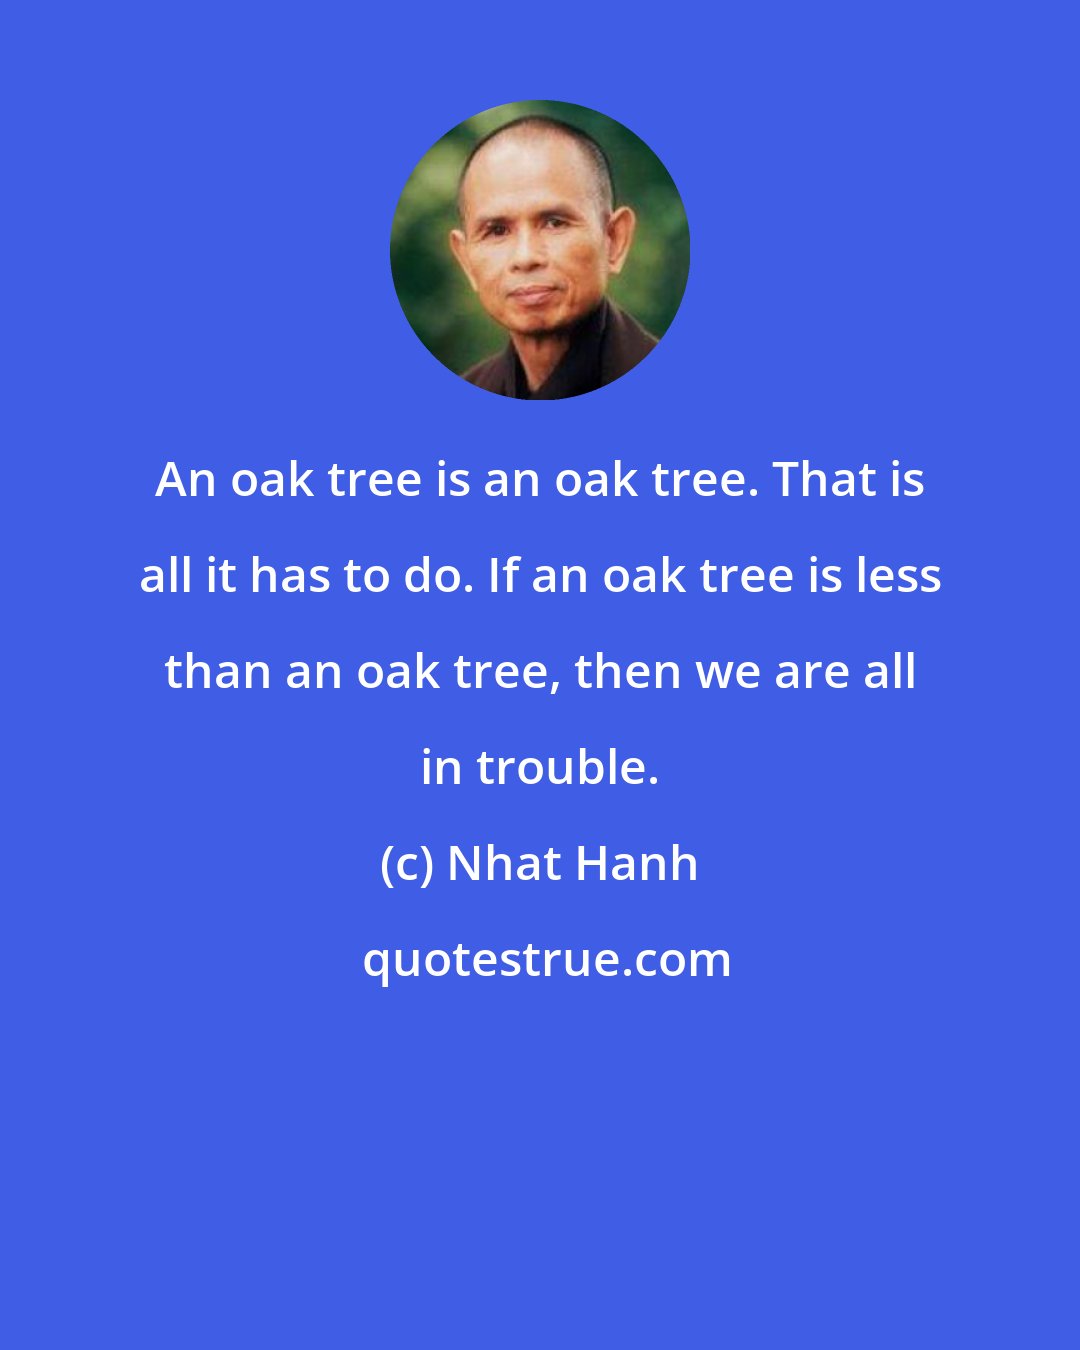 Nhat Hanh: An oak tree is an oak tree. That is all it has to do. If an oak tree is less than an oak tree, then we are all in trouble.